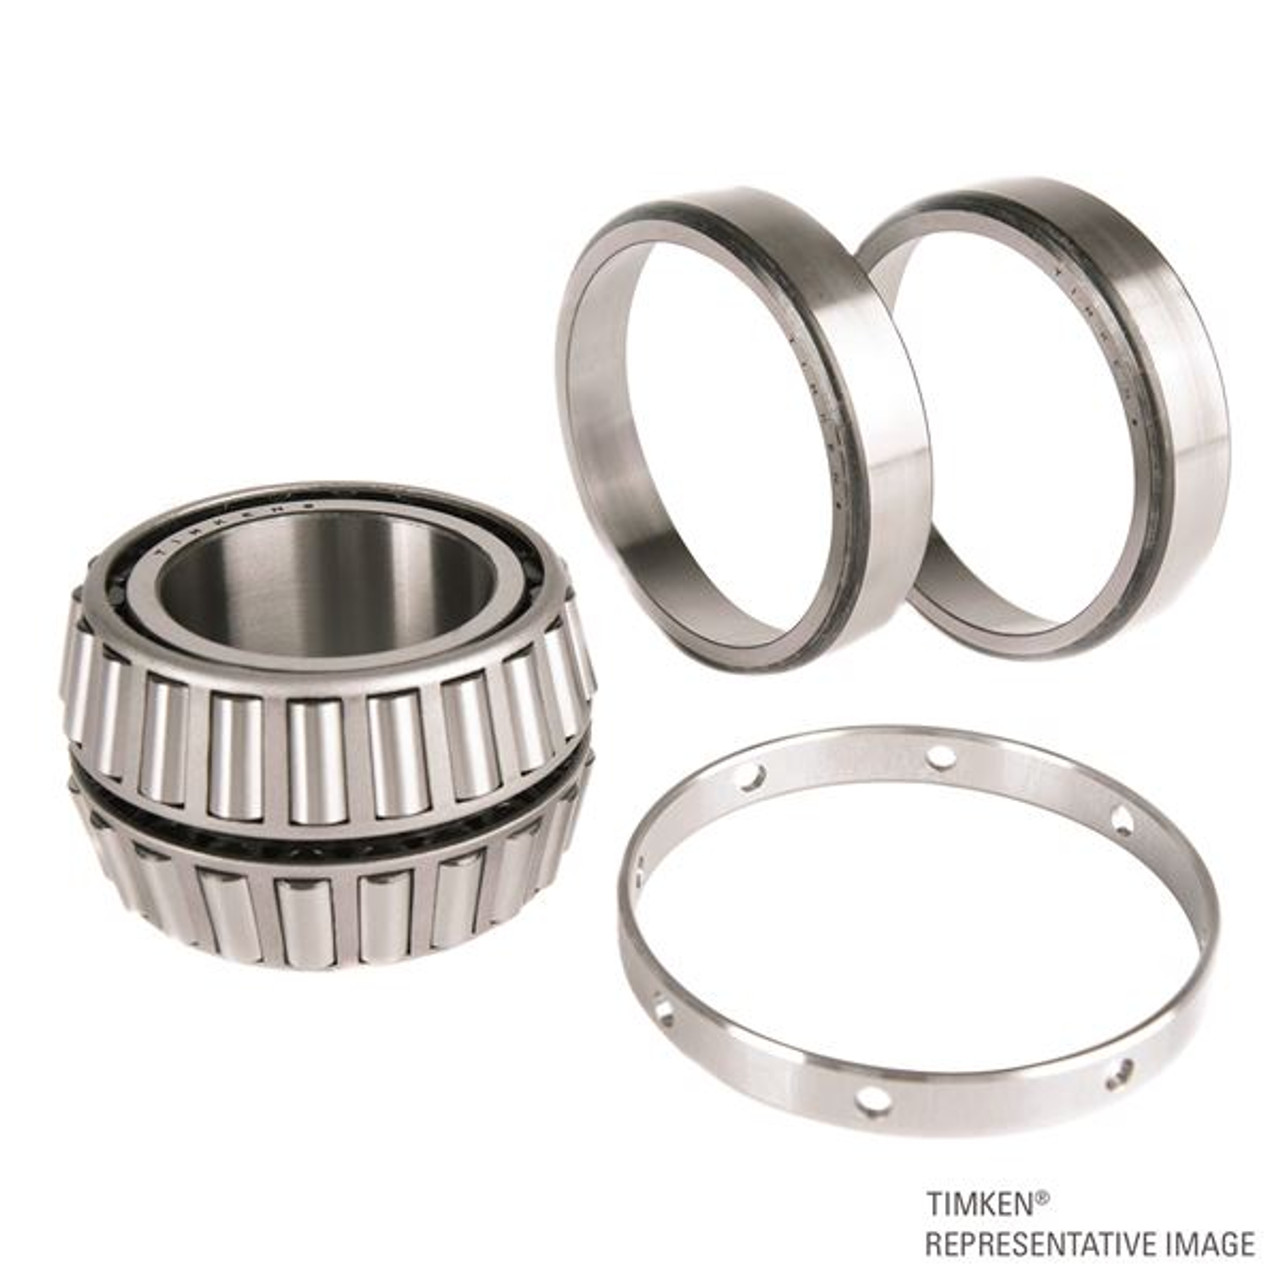 Timken® TDI Single Double Cone Assembly  HM237545-90146